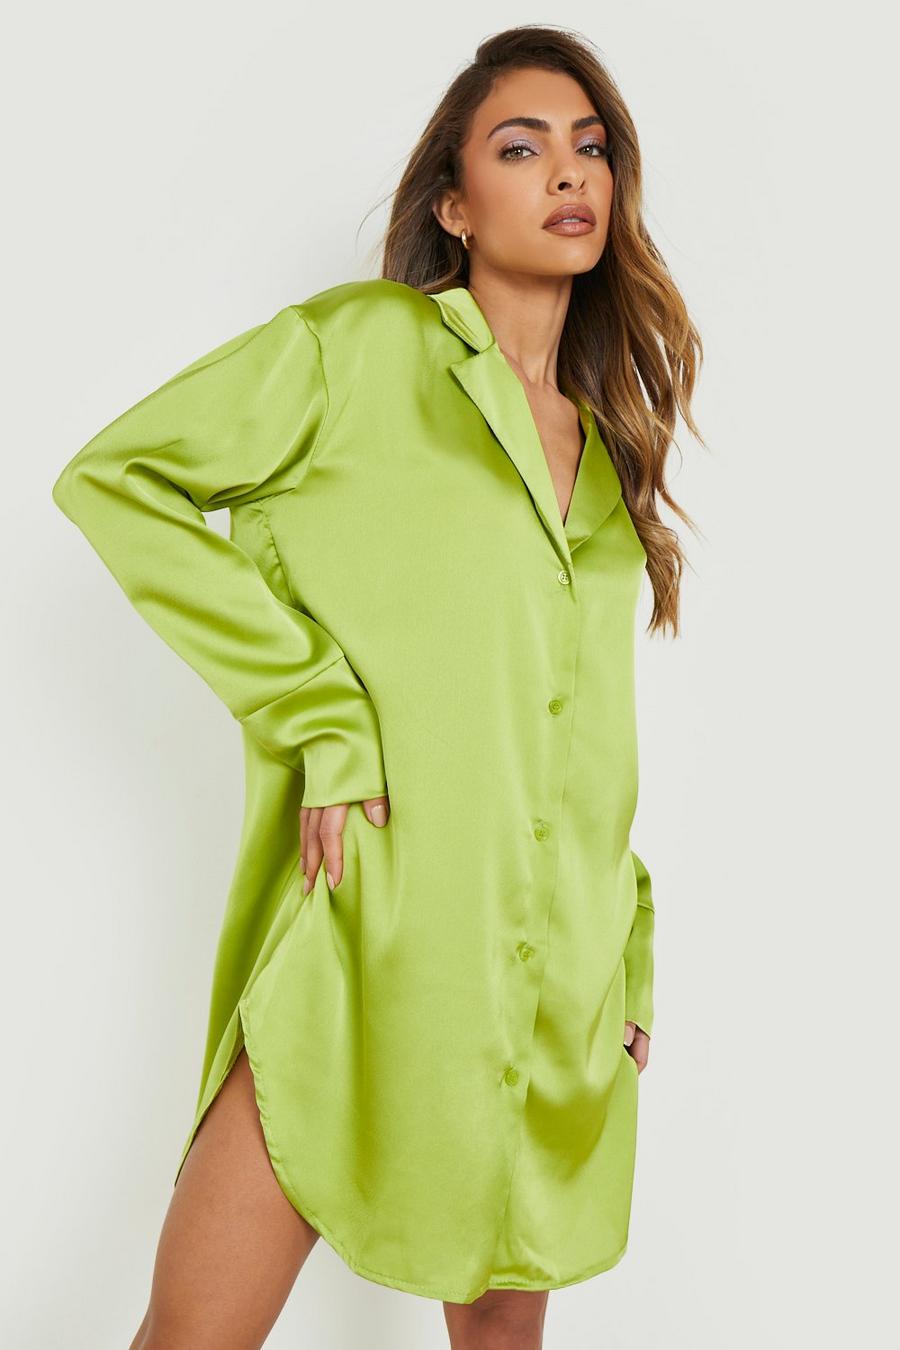 Olive Green Shirt Dress